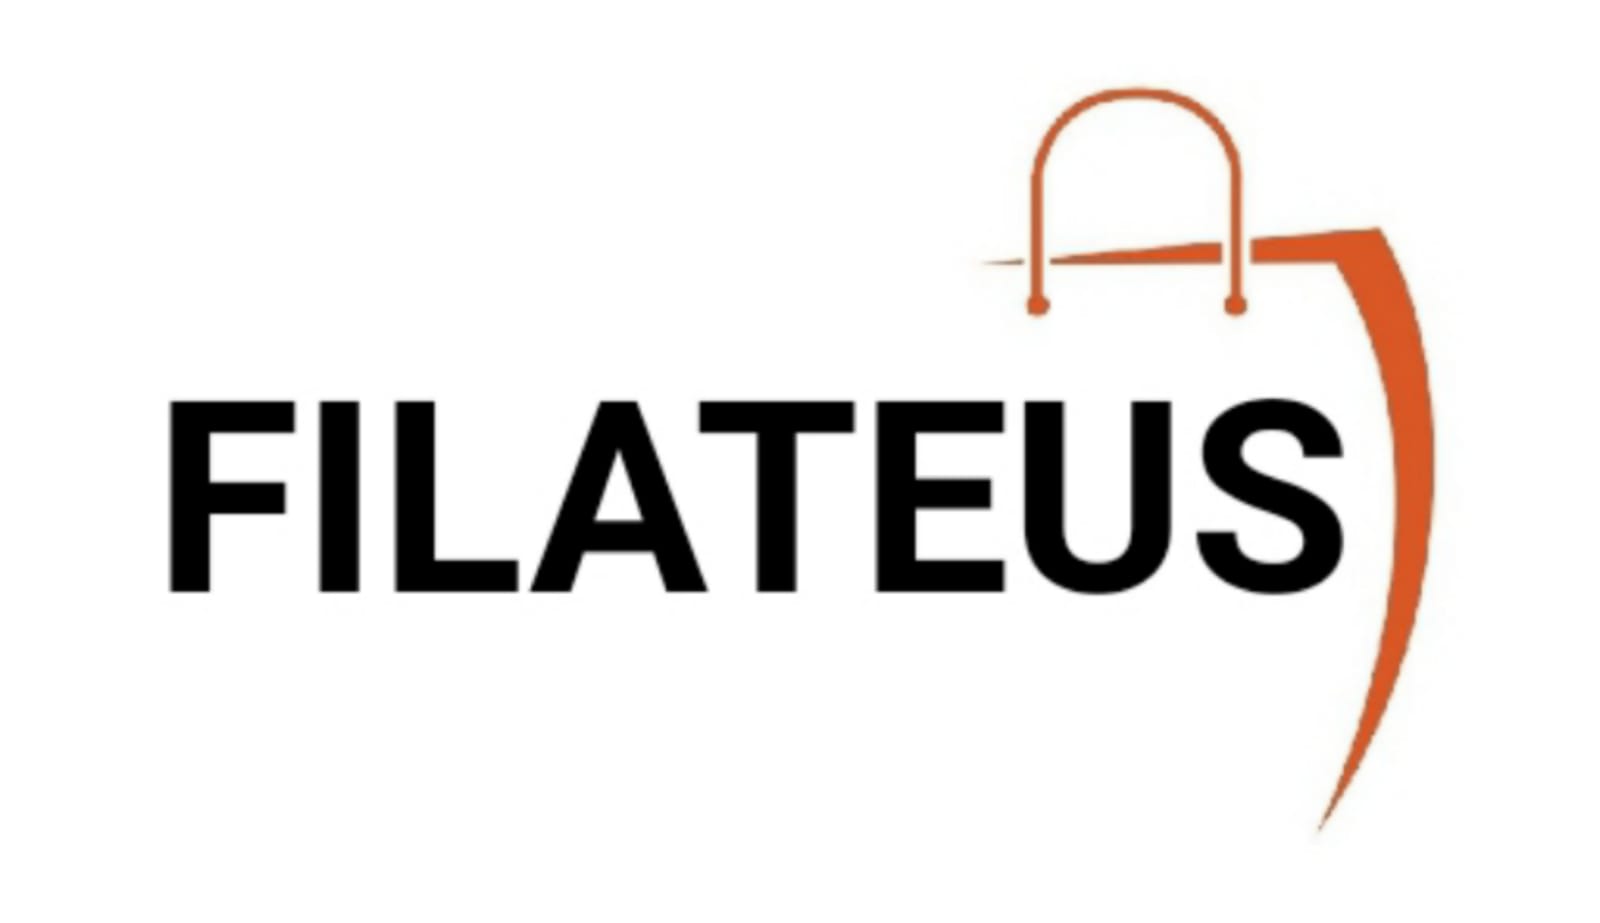 Filateus